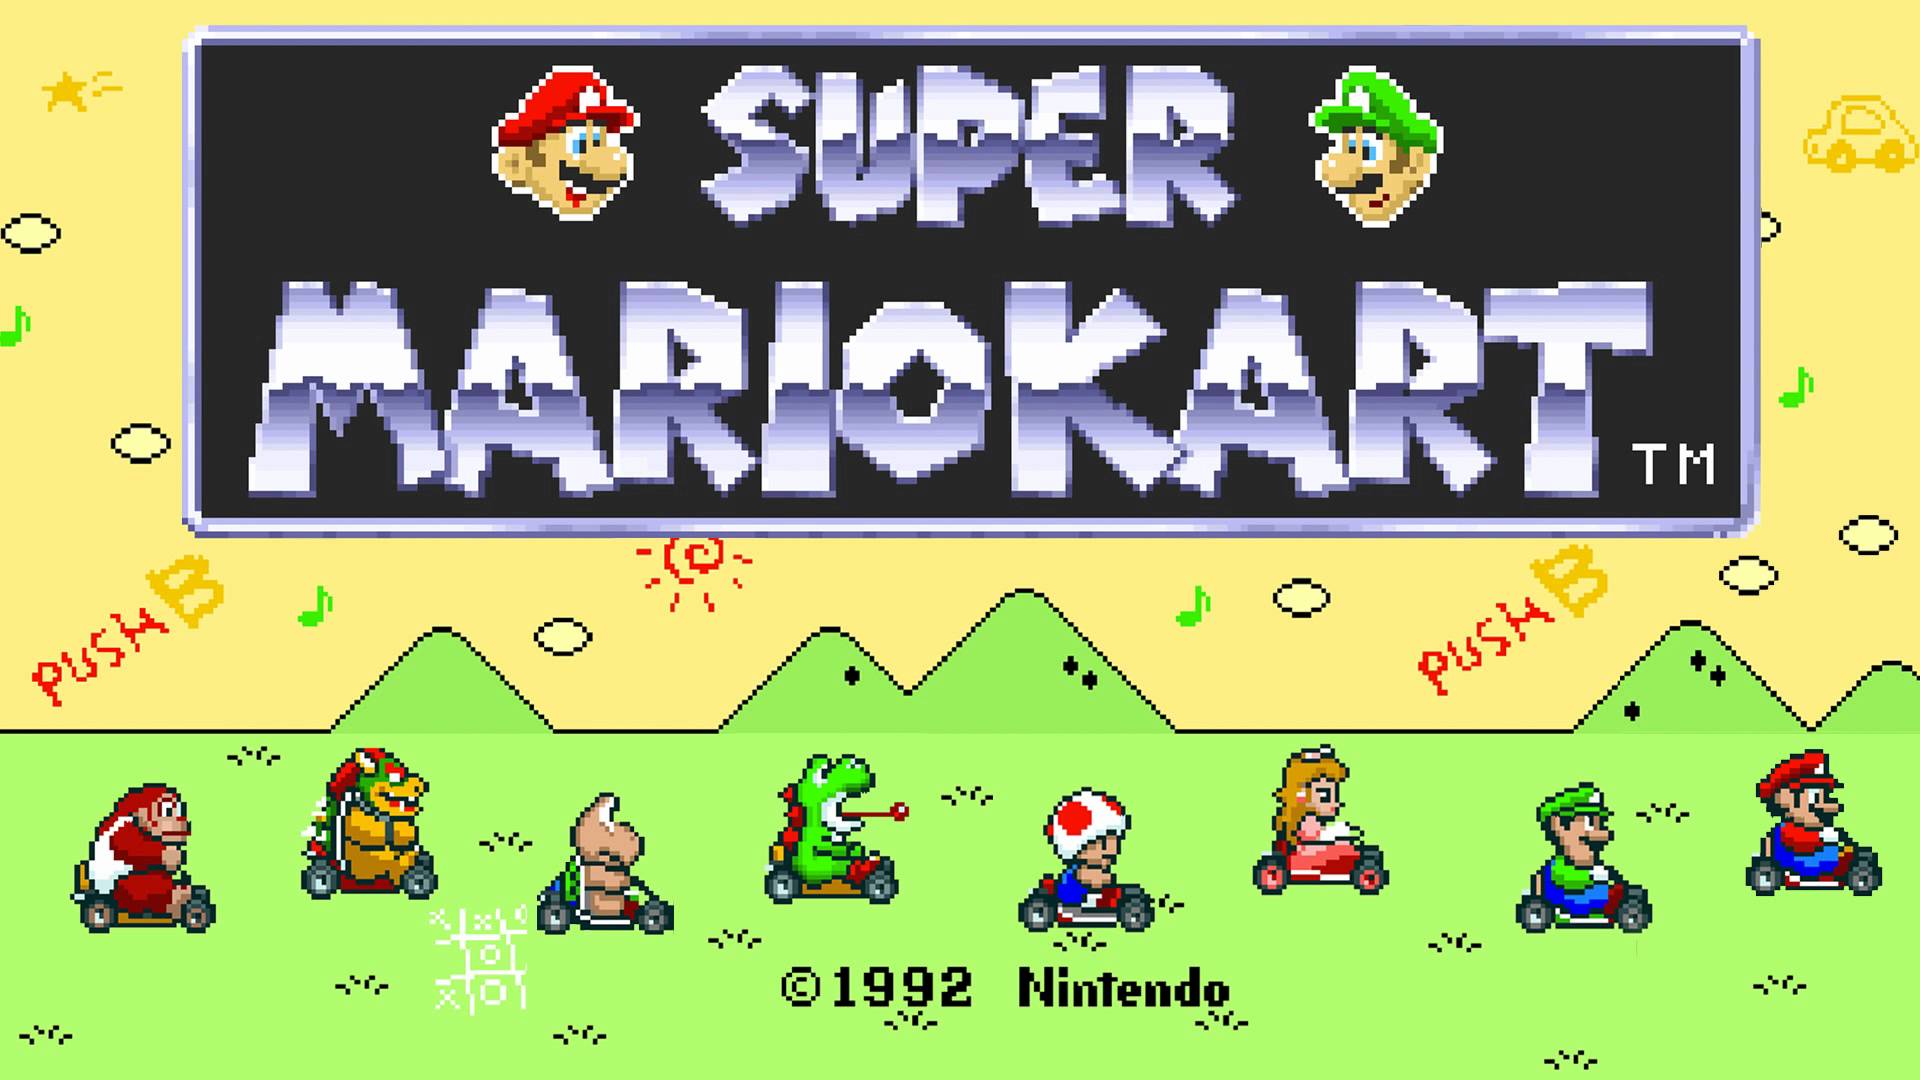 Mario kart: a comprehensive history